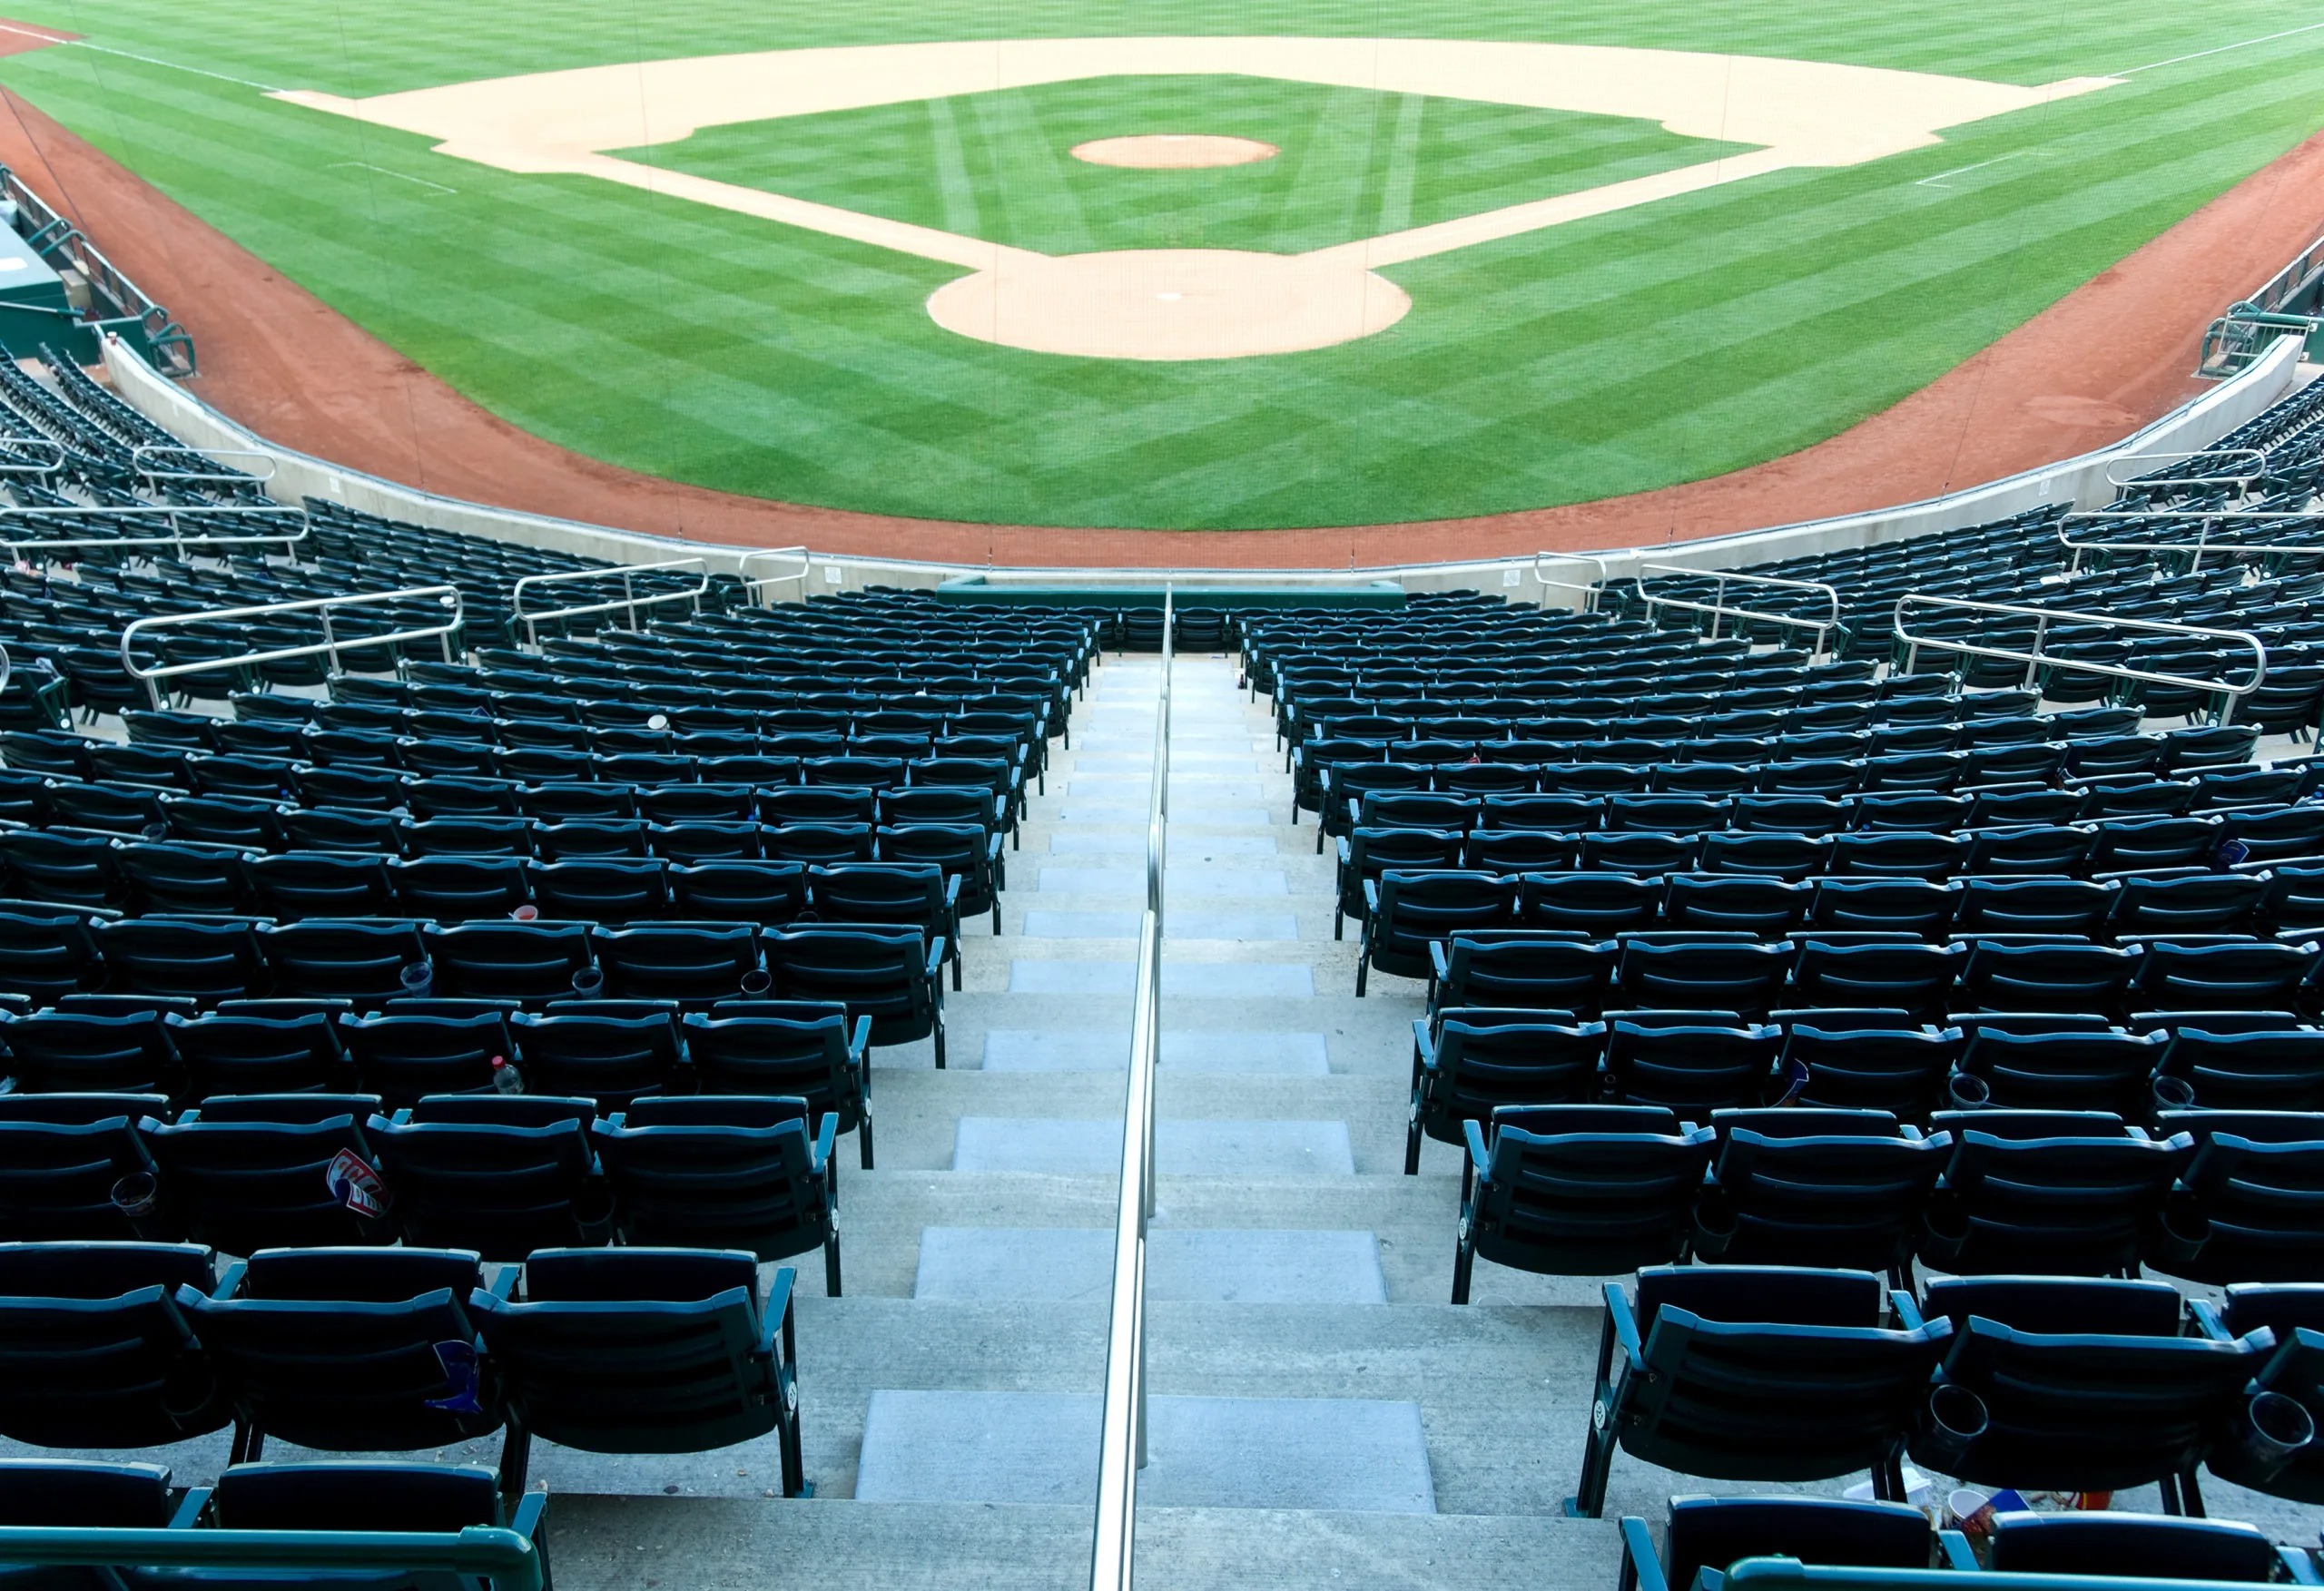 Stadium seats with baseball field in sight